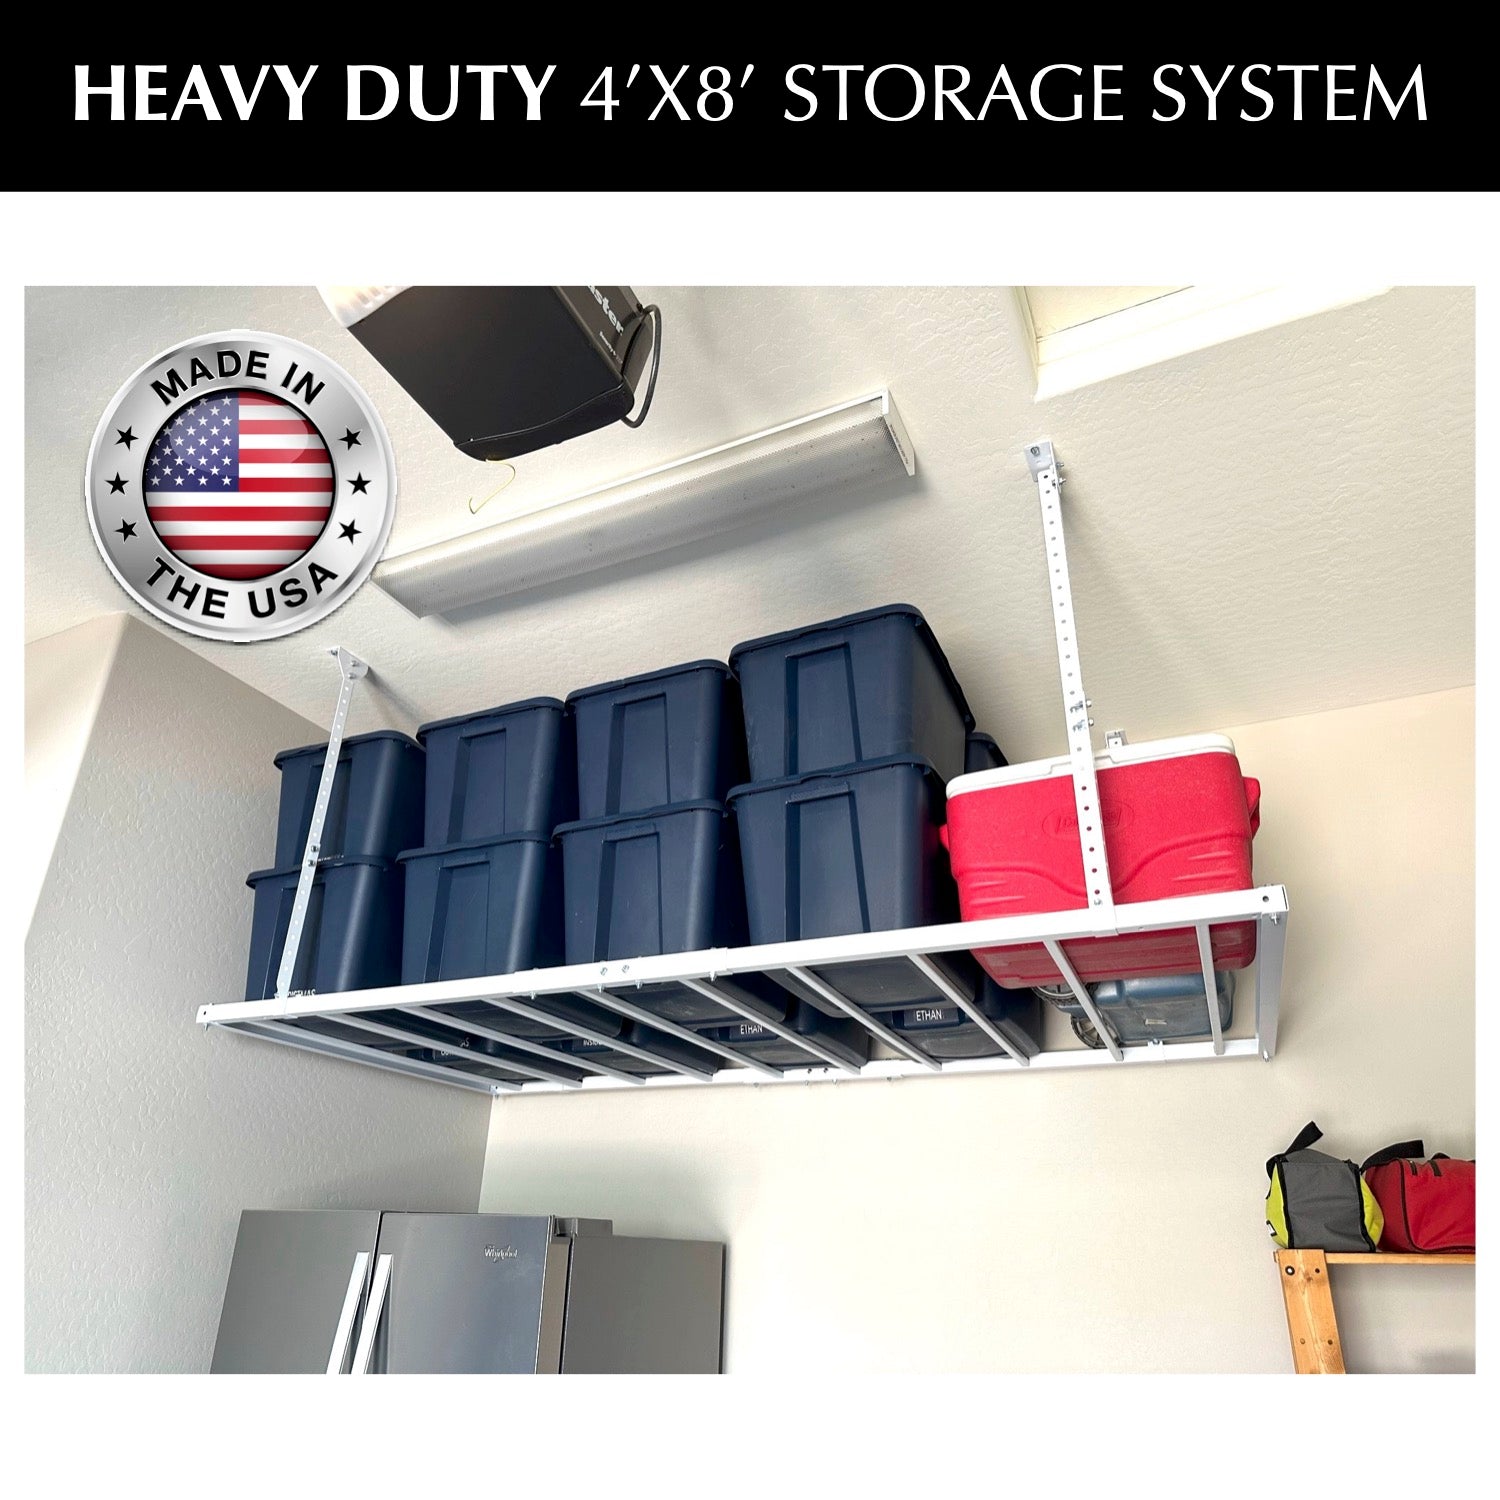 Wholesale 1000 Lbs 4’x 8’ - Overhead Garage Storage